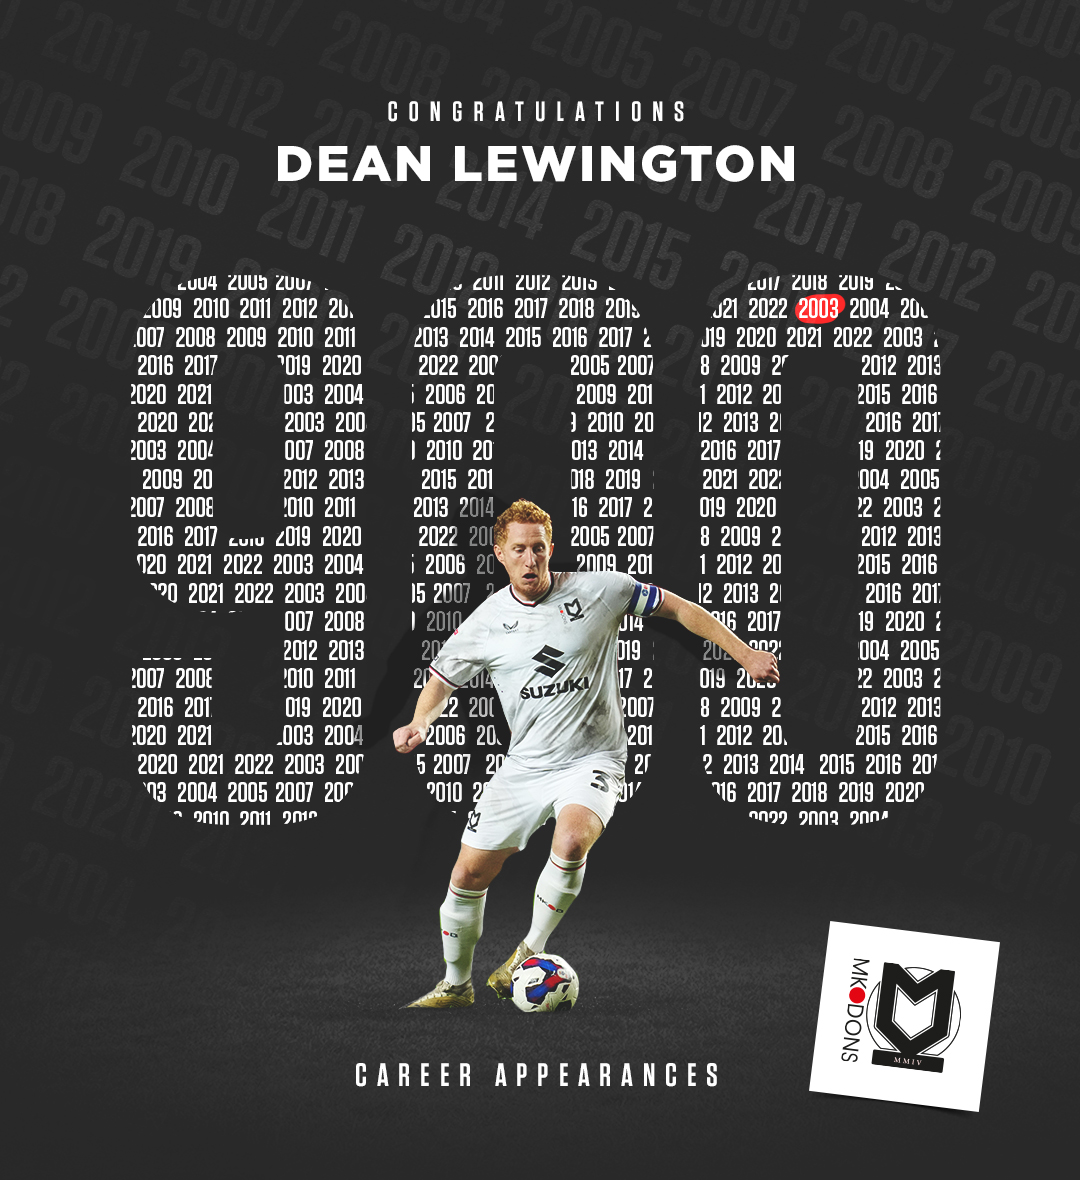 900 career games for Dean Lewington 👏 Congratulations, Skip!